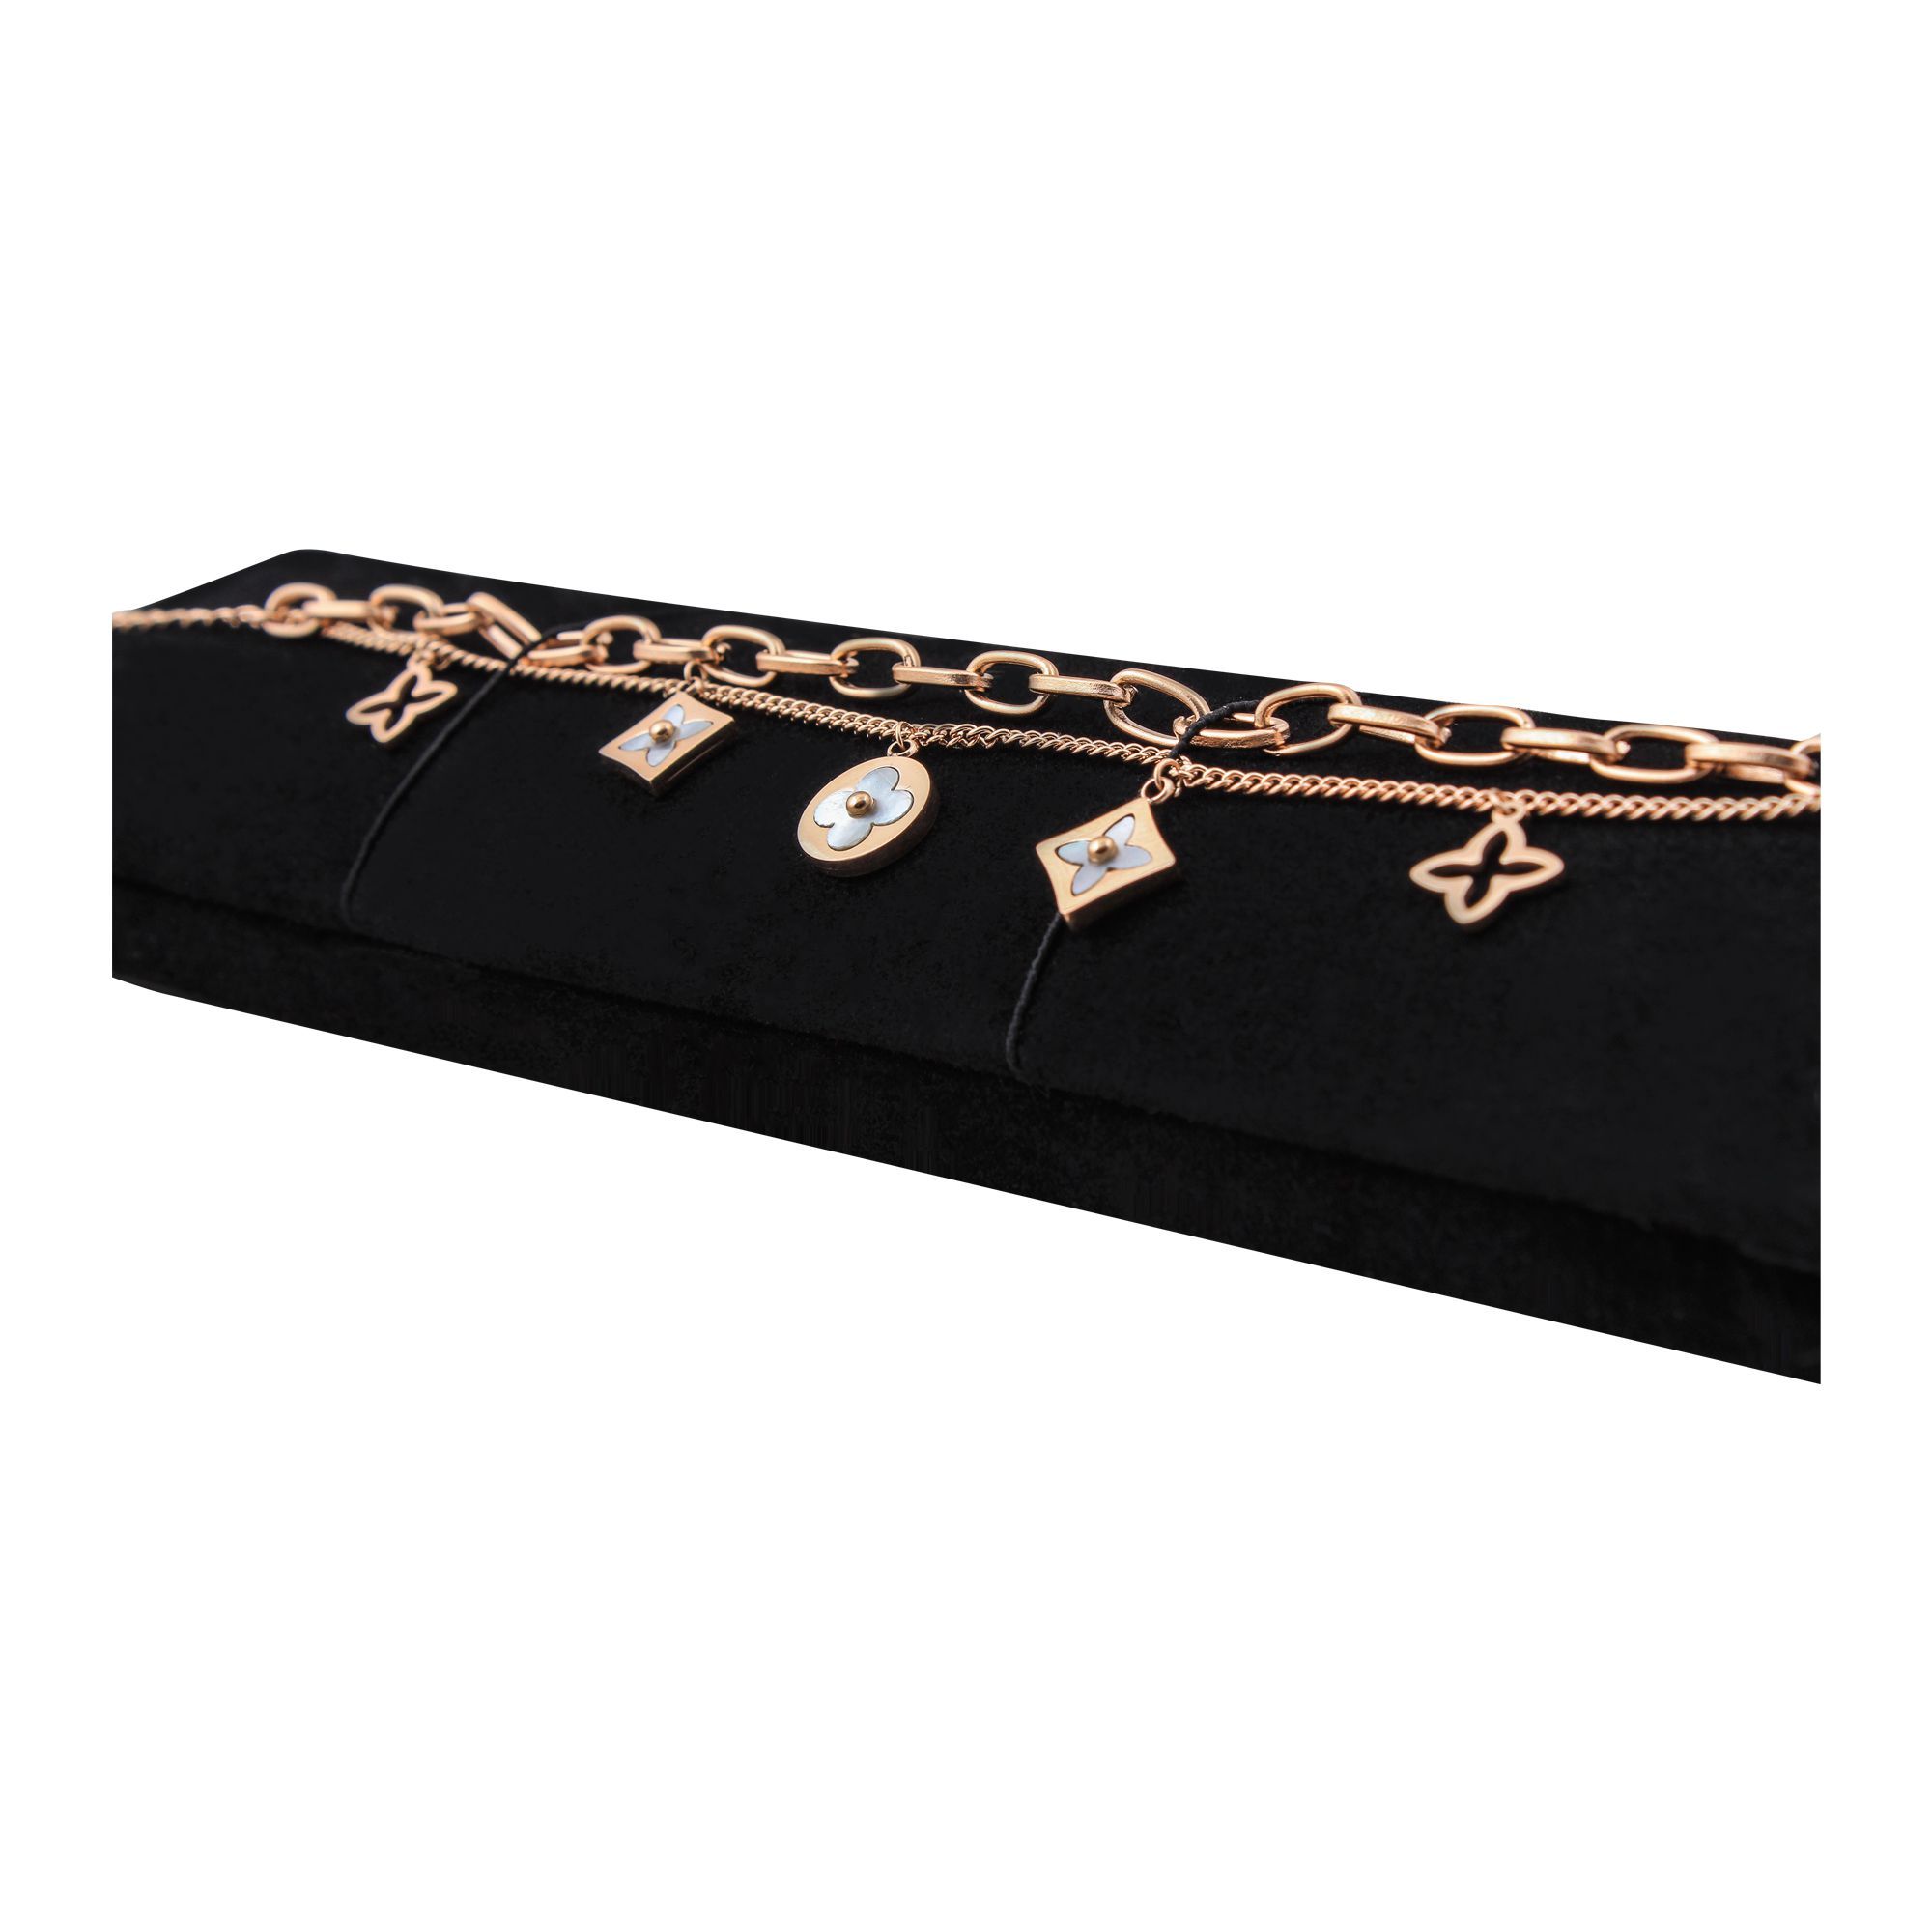 Buy LV Style Girls Bracelet, NS-037 Online at Special Price in Pakistan - www.waldenwongart.com